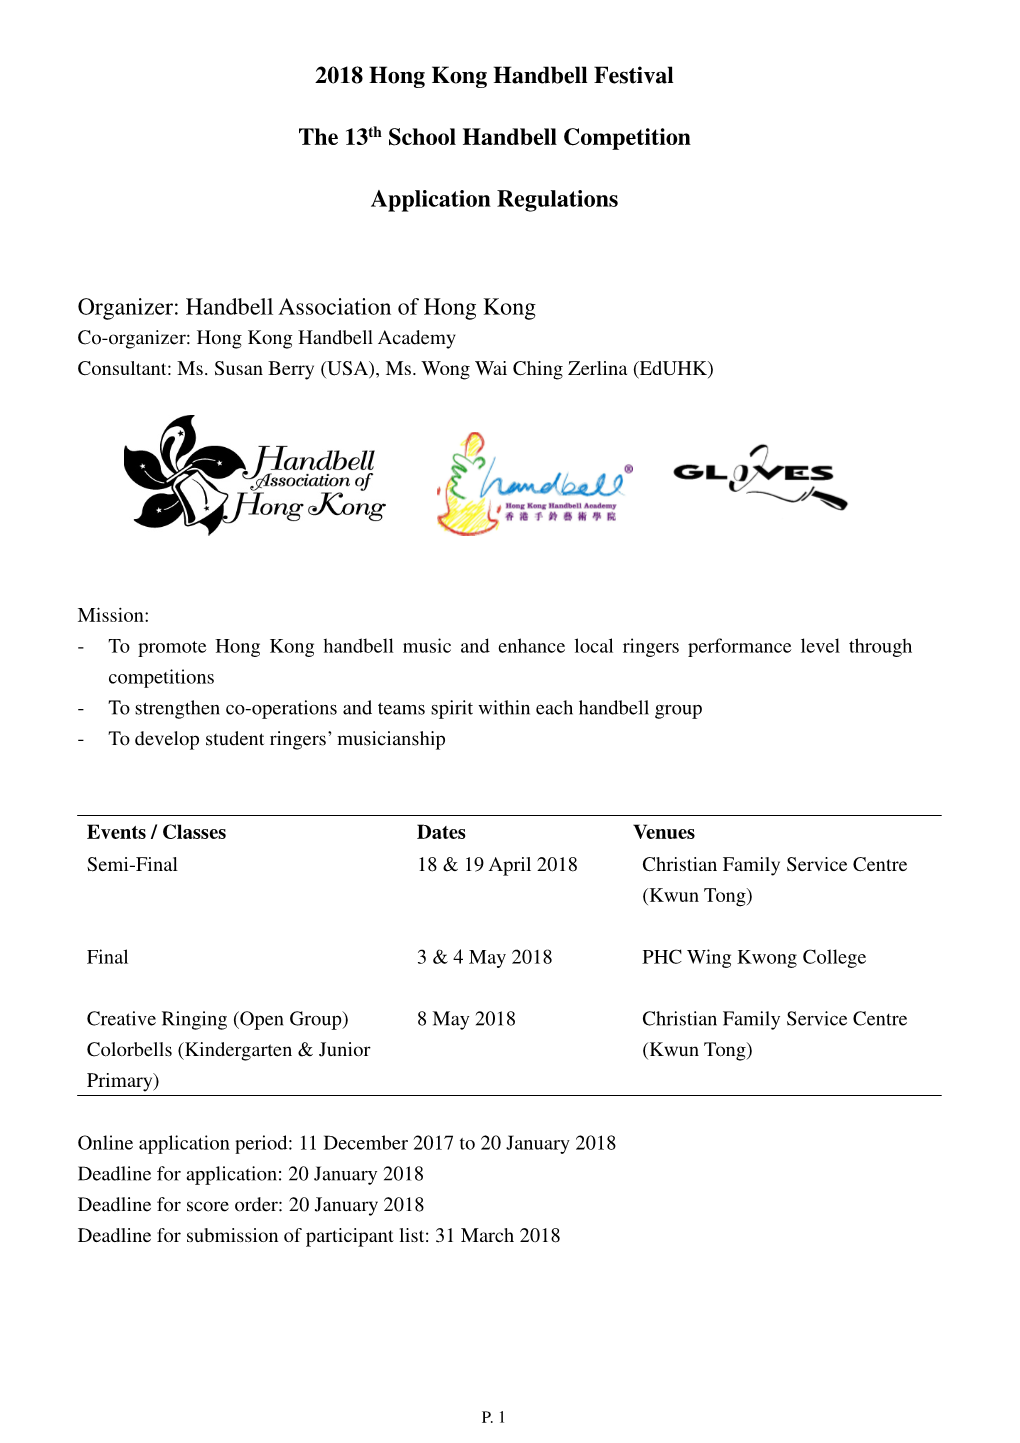 Handbell Association of Hong Kong Co-Organizer: Hong Kong Handbell Academy Consultant: Ms